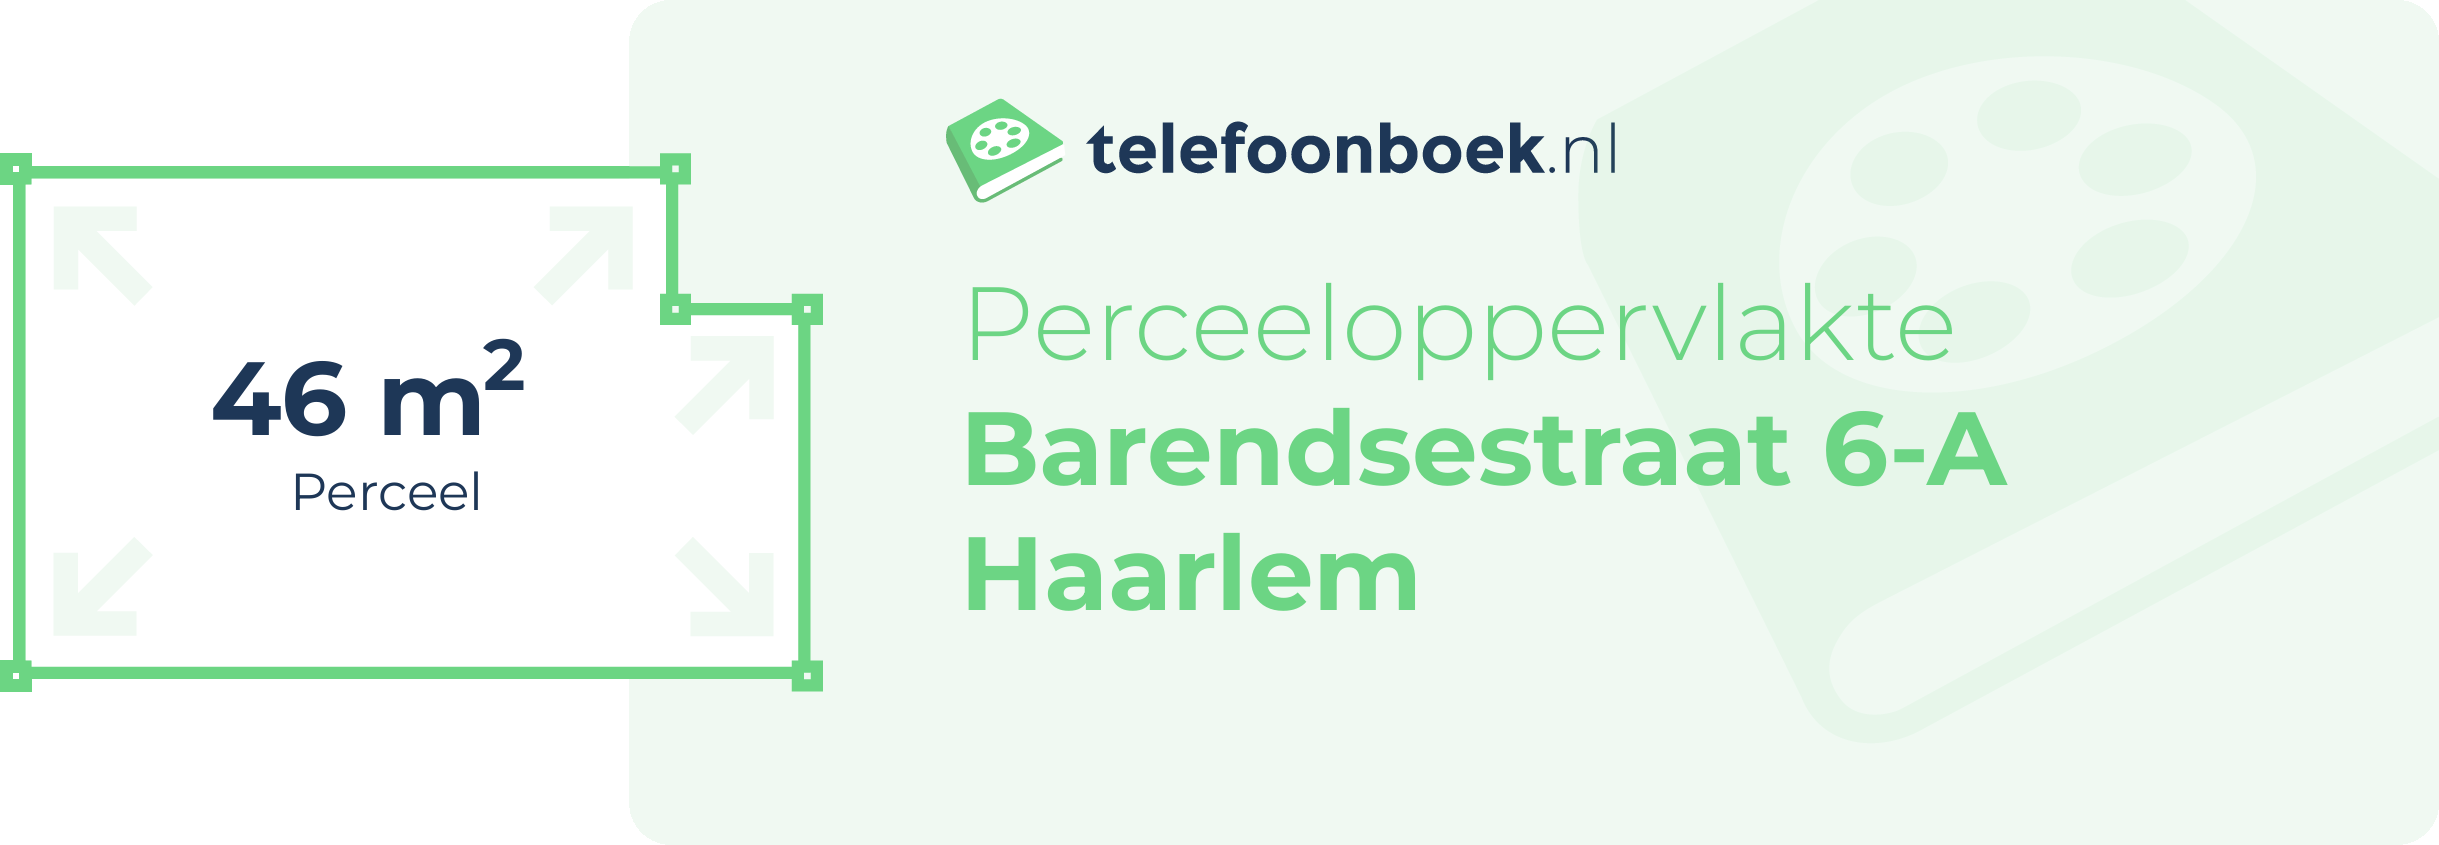 Perceeloppervlakte Barendsestraat 6-A Haarlem